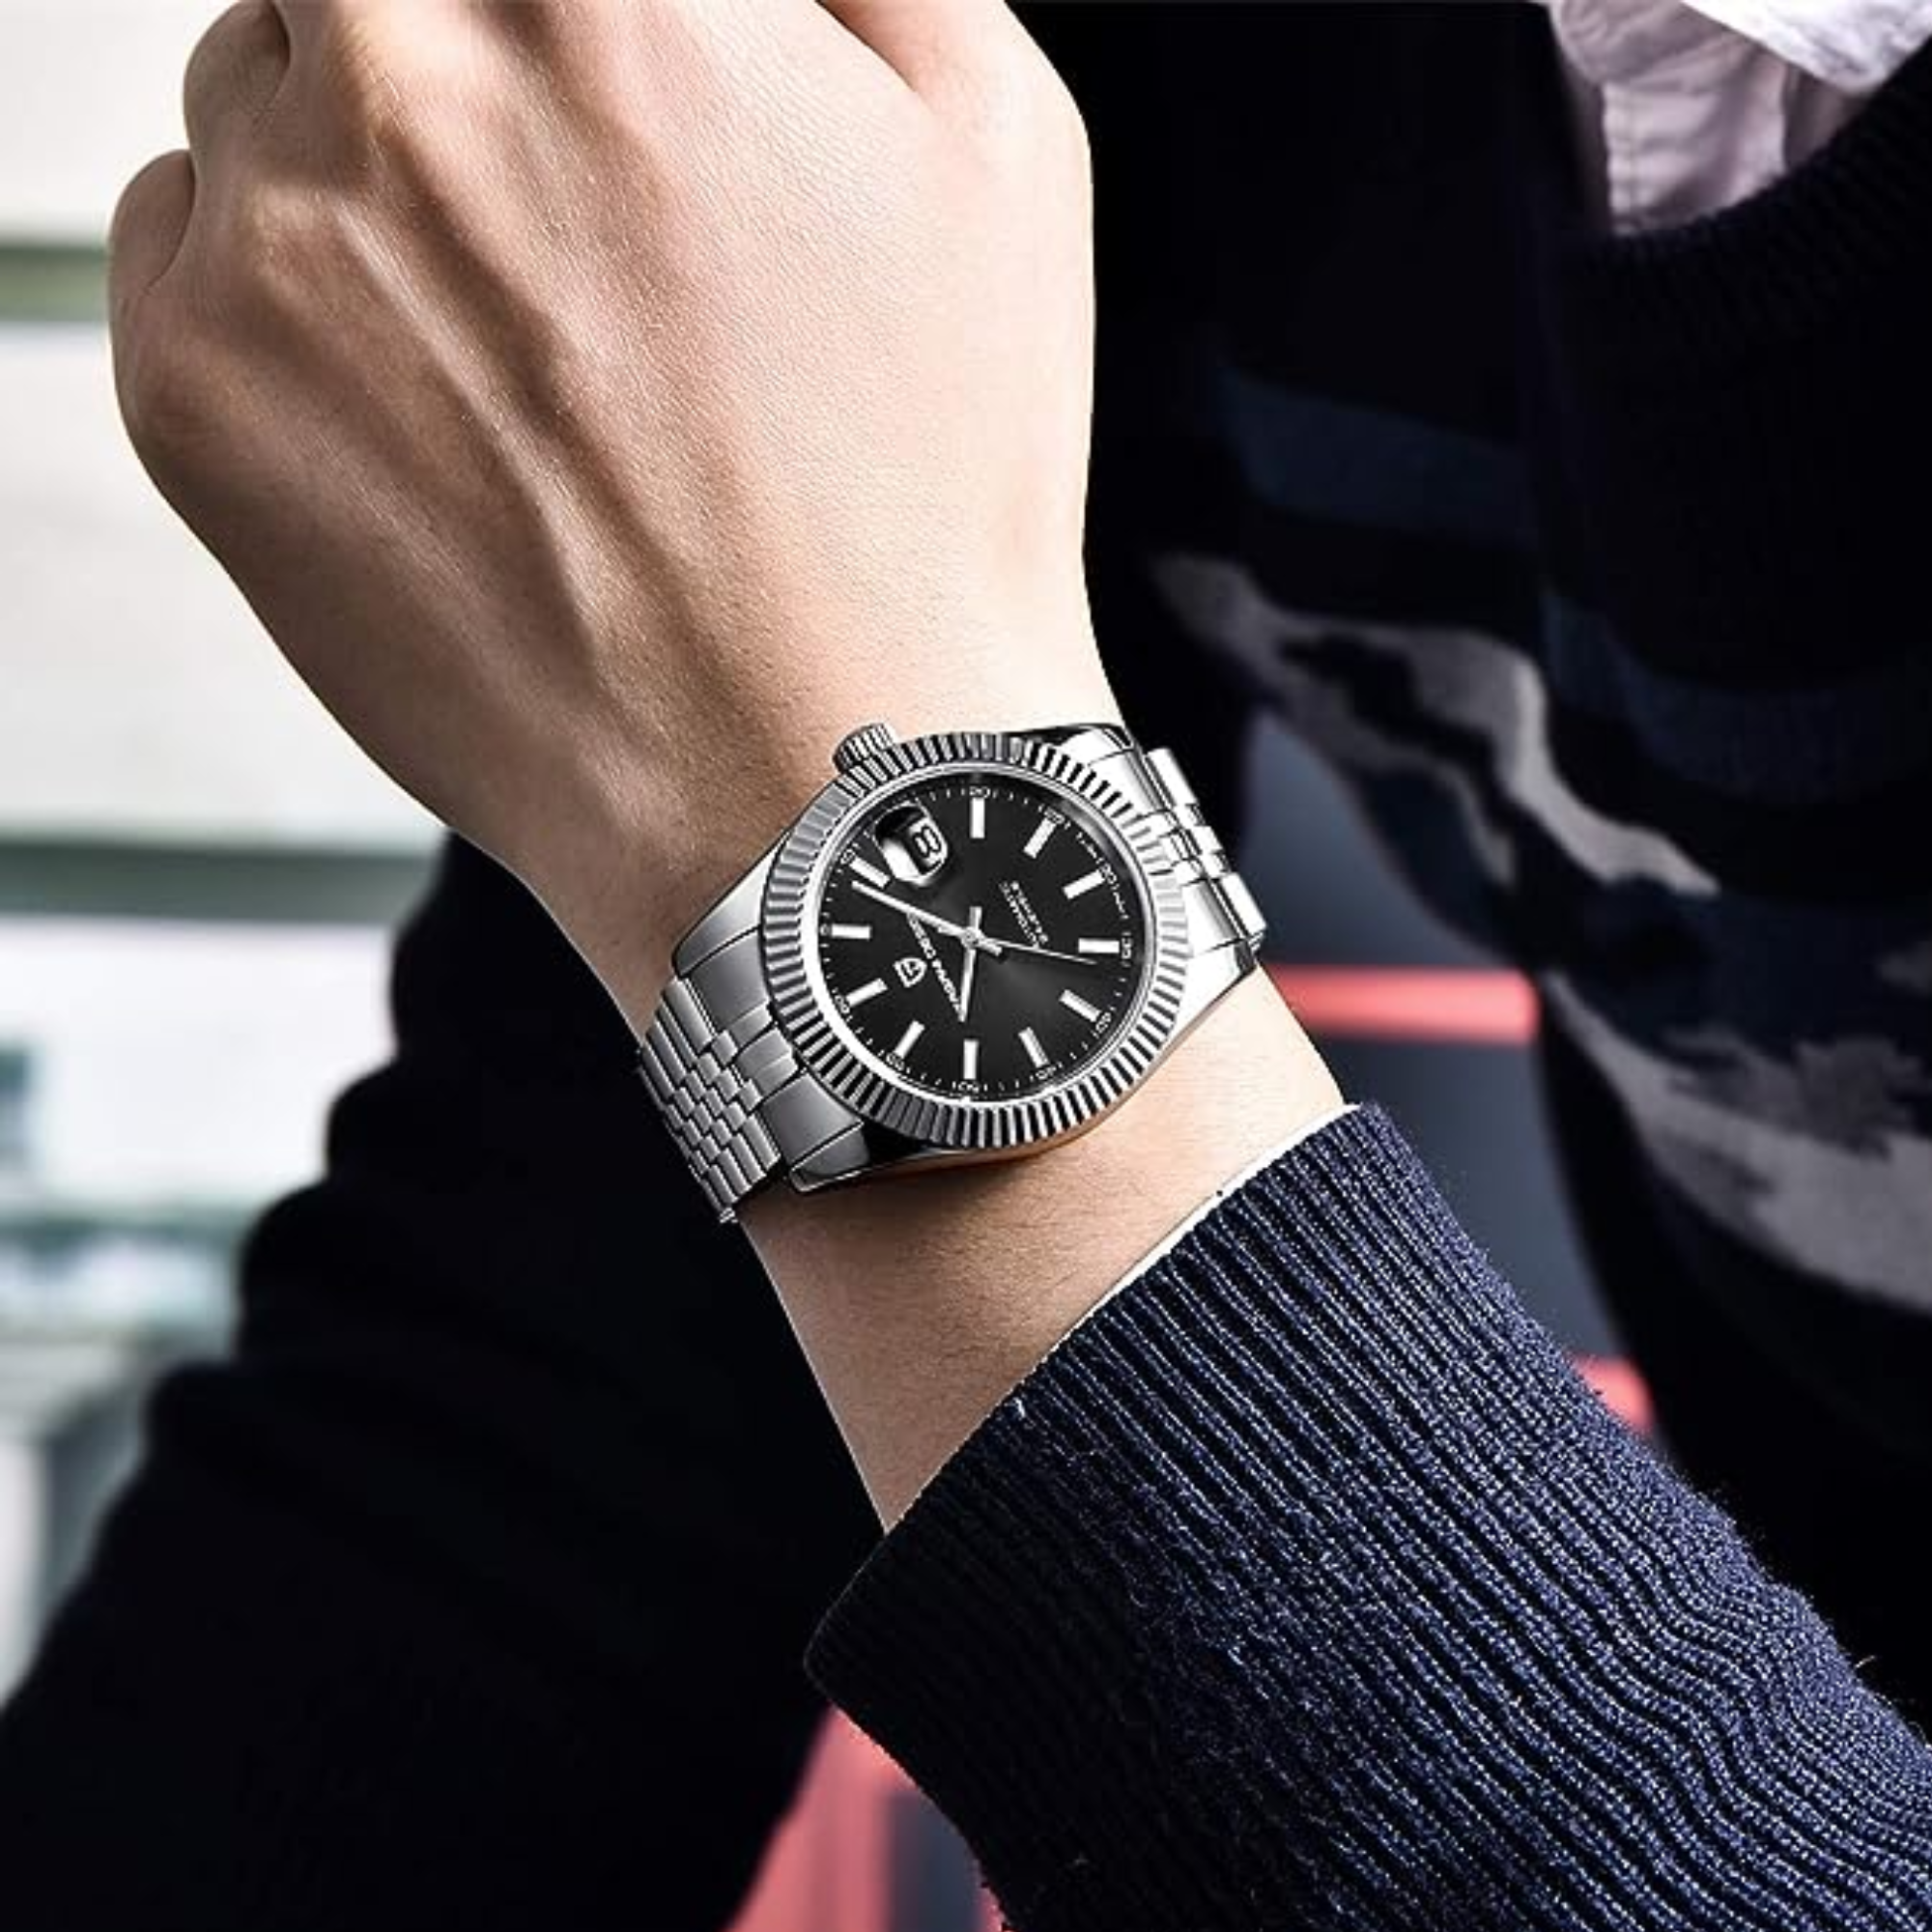 Pagani Design PD-1645 DateJust (Seiko NH-35A Automatic Movement) Mechanical Watch 200M Waterproof Watch Stainless Steel Watch Fluted Bezel (Black Dial - Jubilee Bracelet)